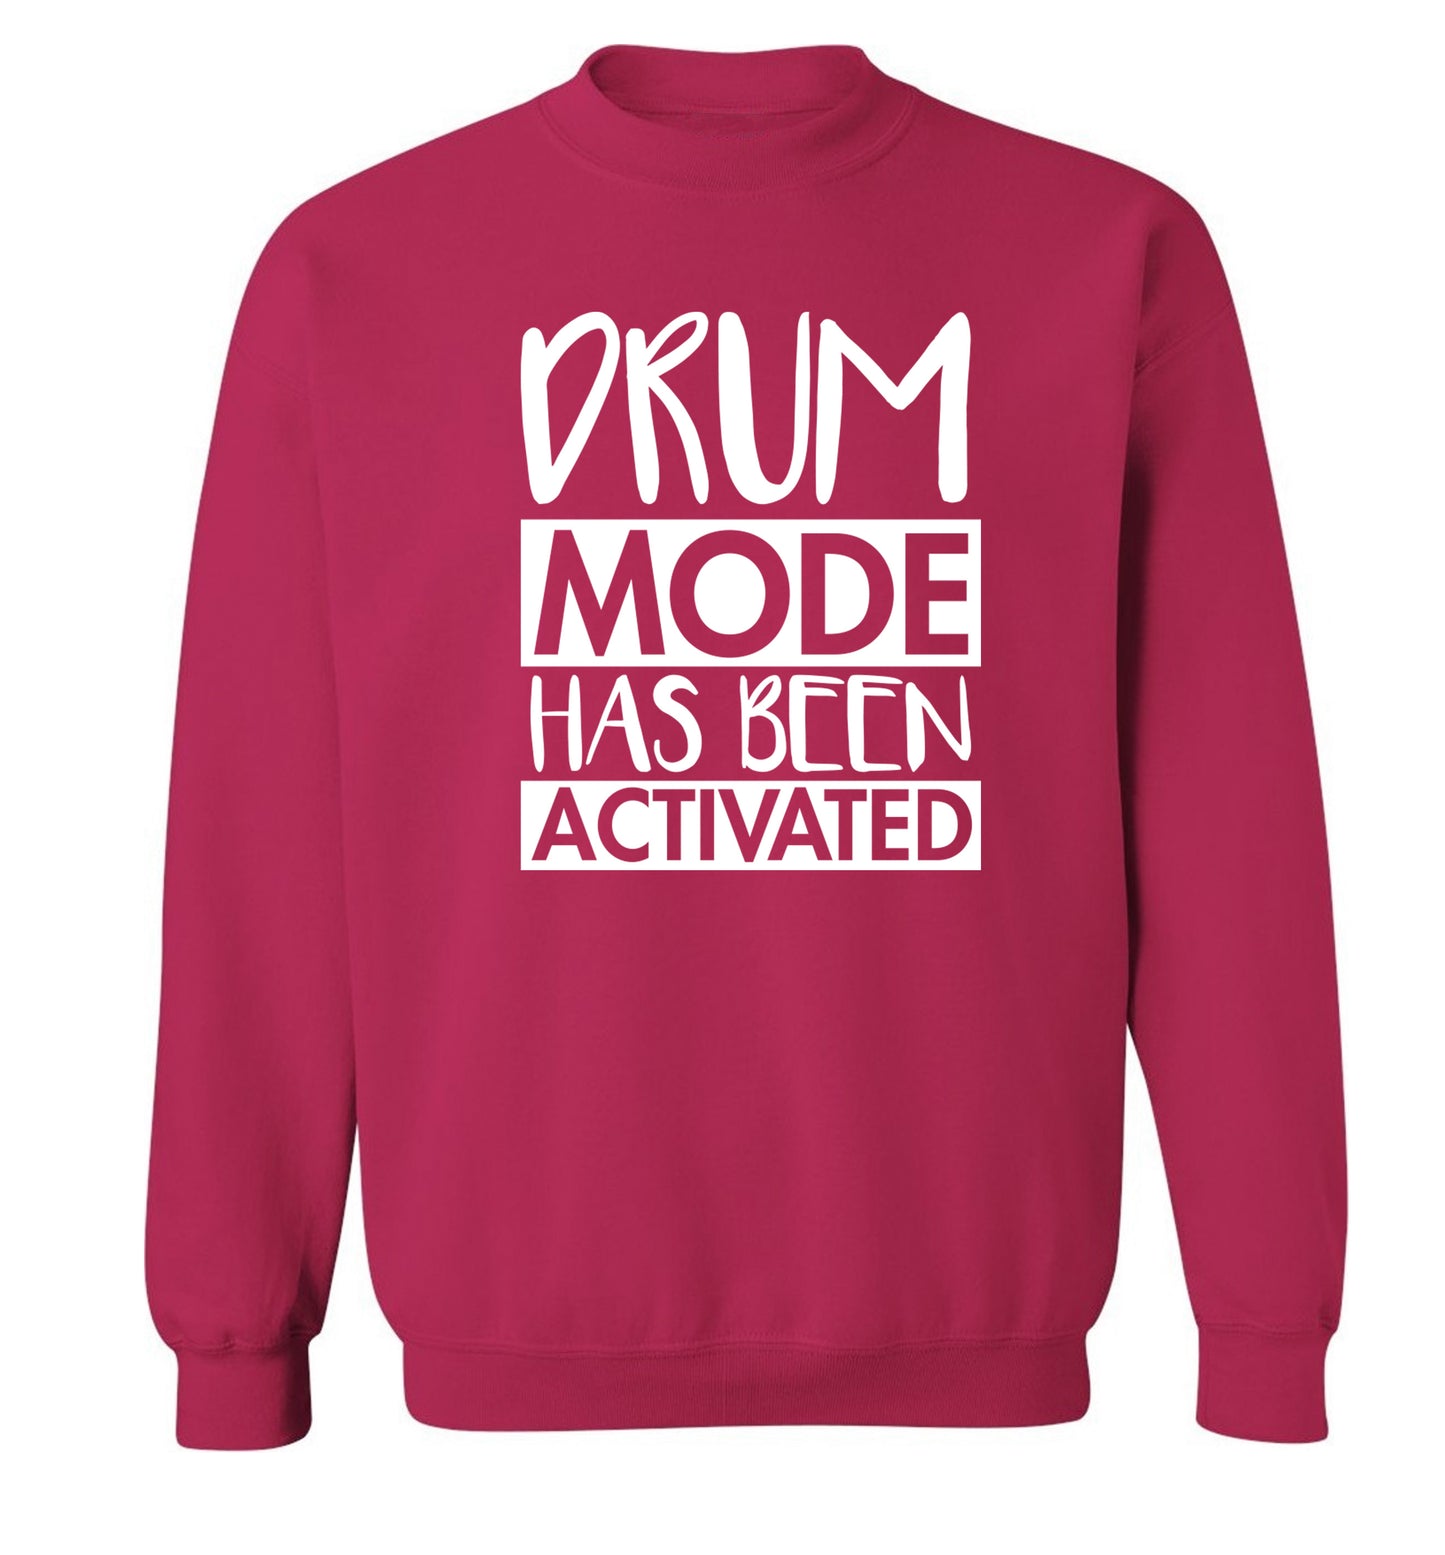 Drum mode activated Adult's unisexpink Sweater 2XL